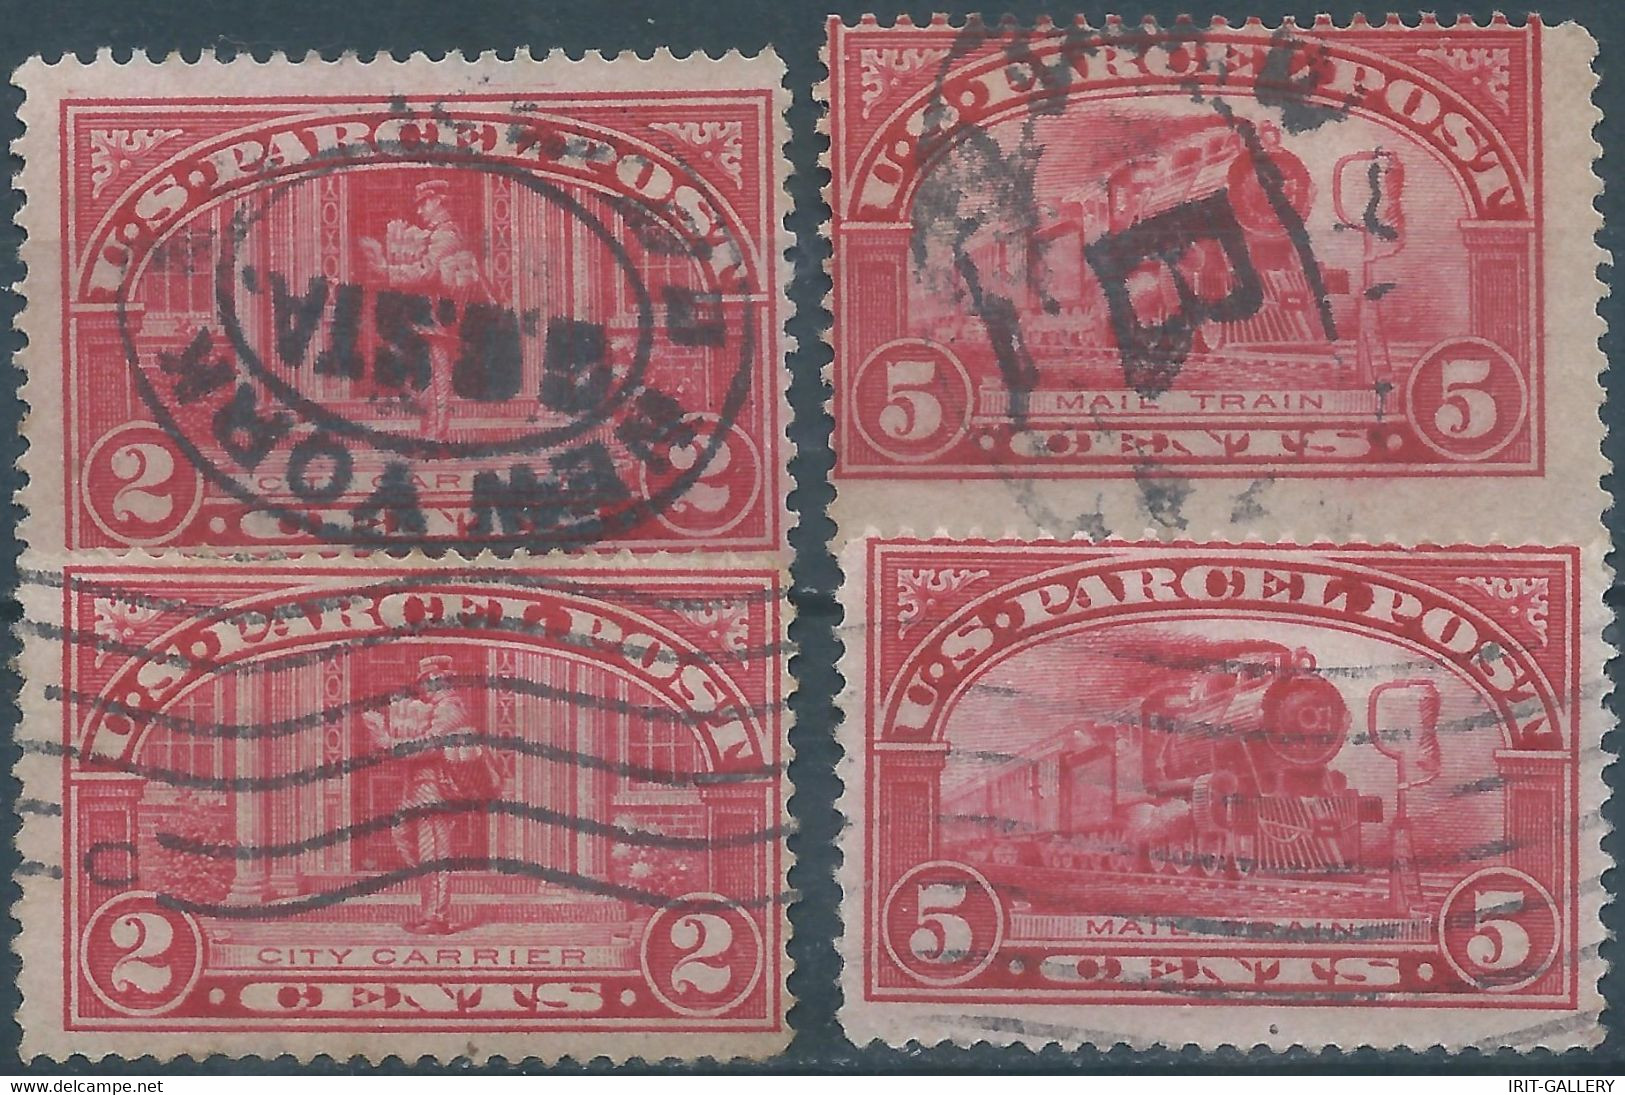 340-United States,U.S.A,Revenue Stamps PARCEL POST,2&5c,Used - Colis